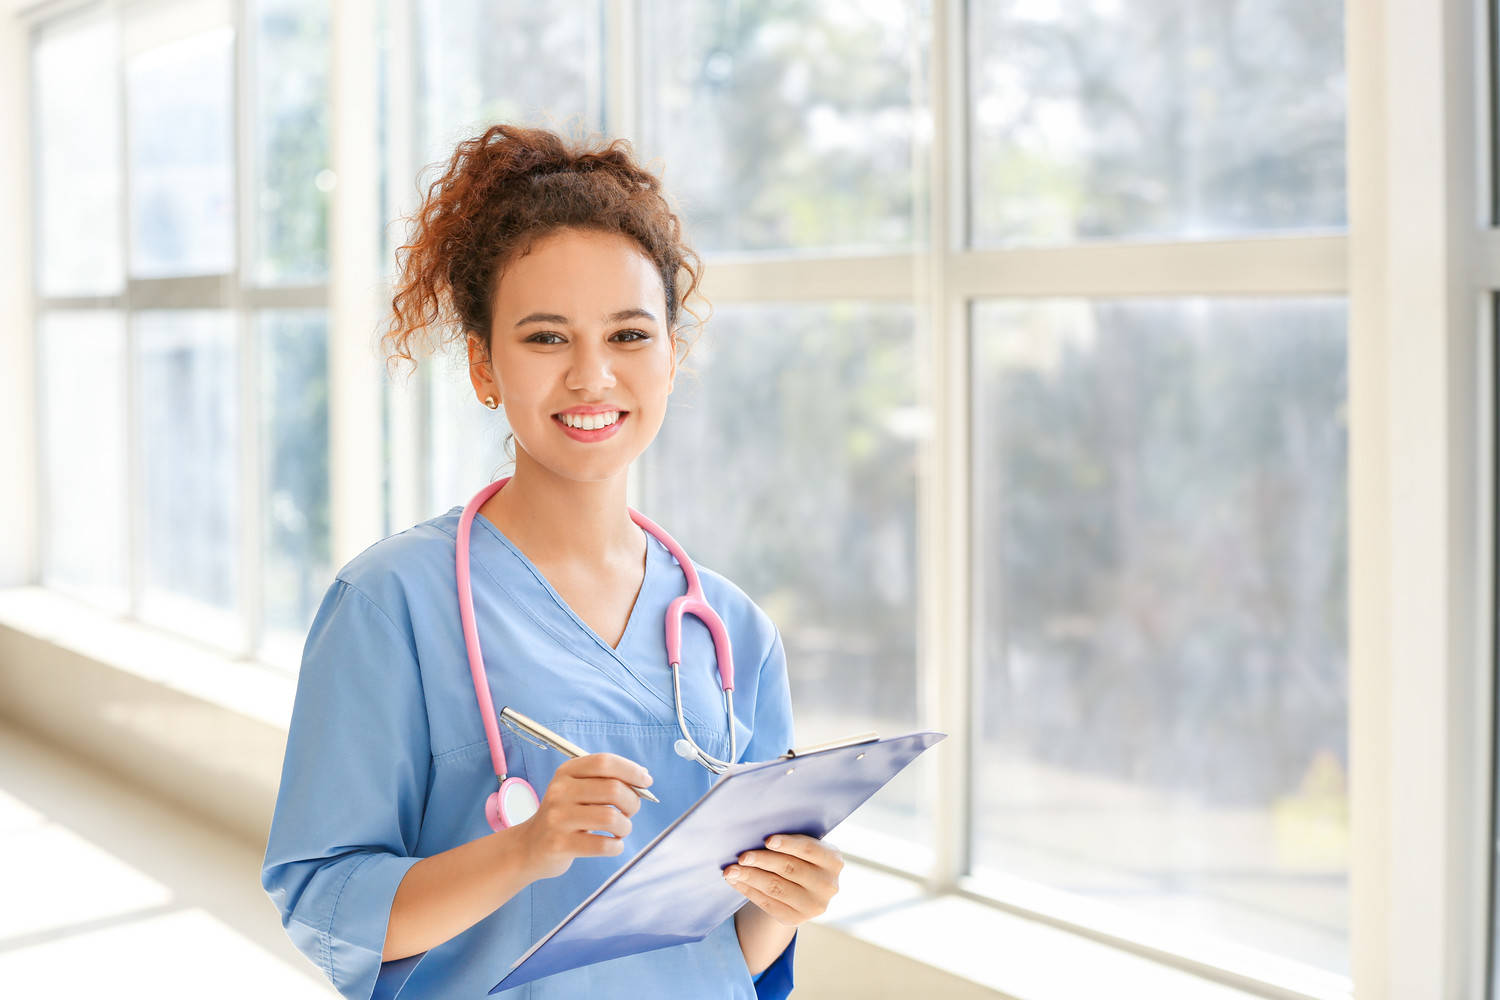 Hiring Medical Technologists and Registered Nurses 